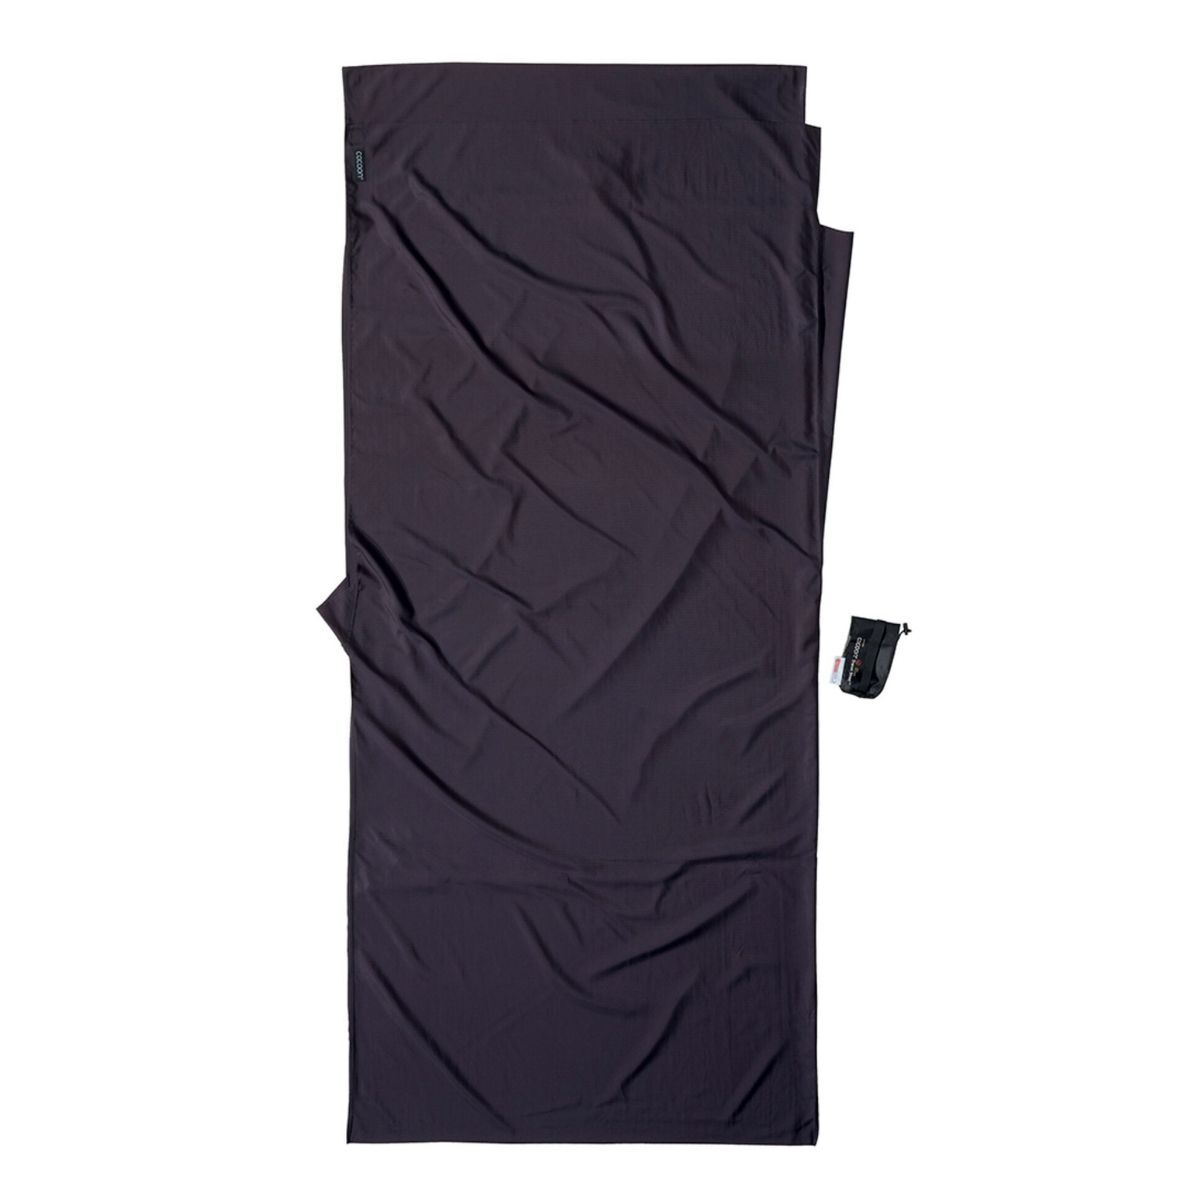 Cocoon Thermolite Silk TravelSheet - Sleeping bag liner